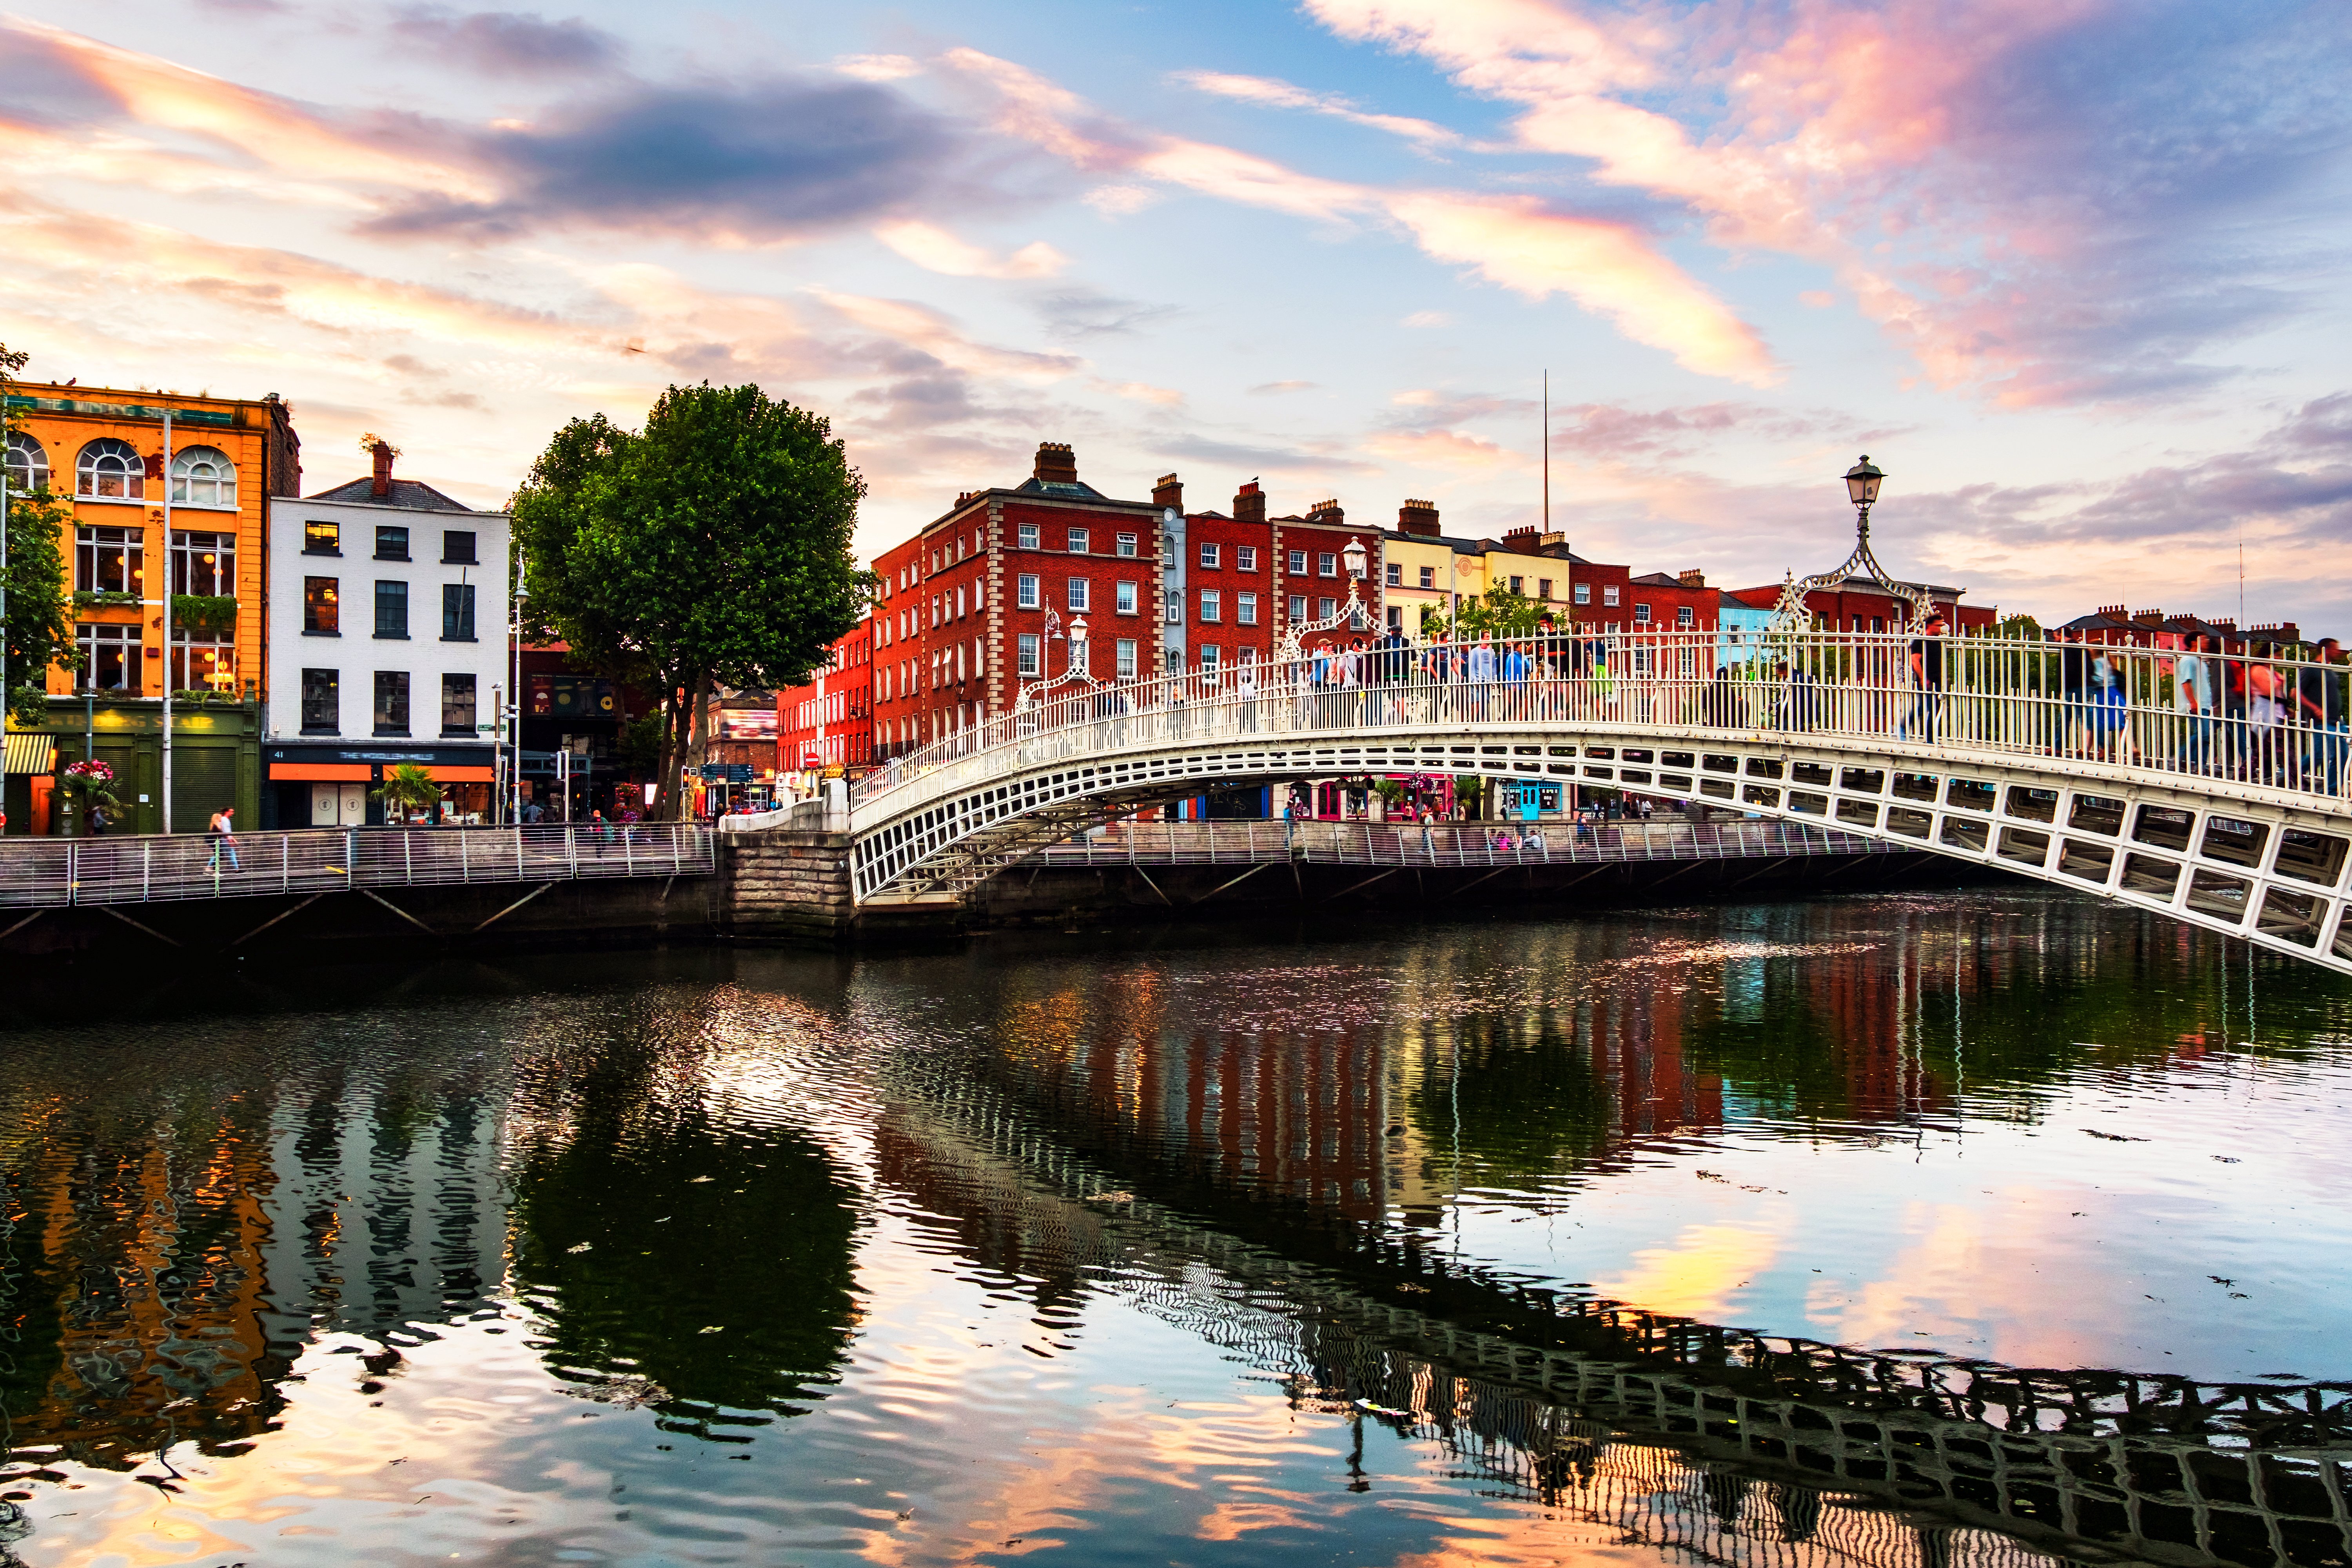  The HaPenny Bridge in Dublin, Ireland